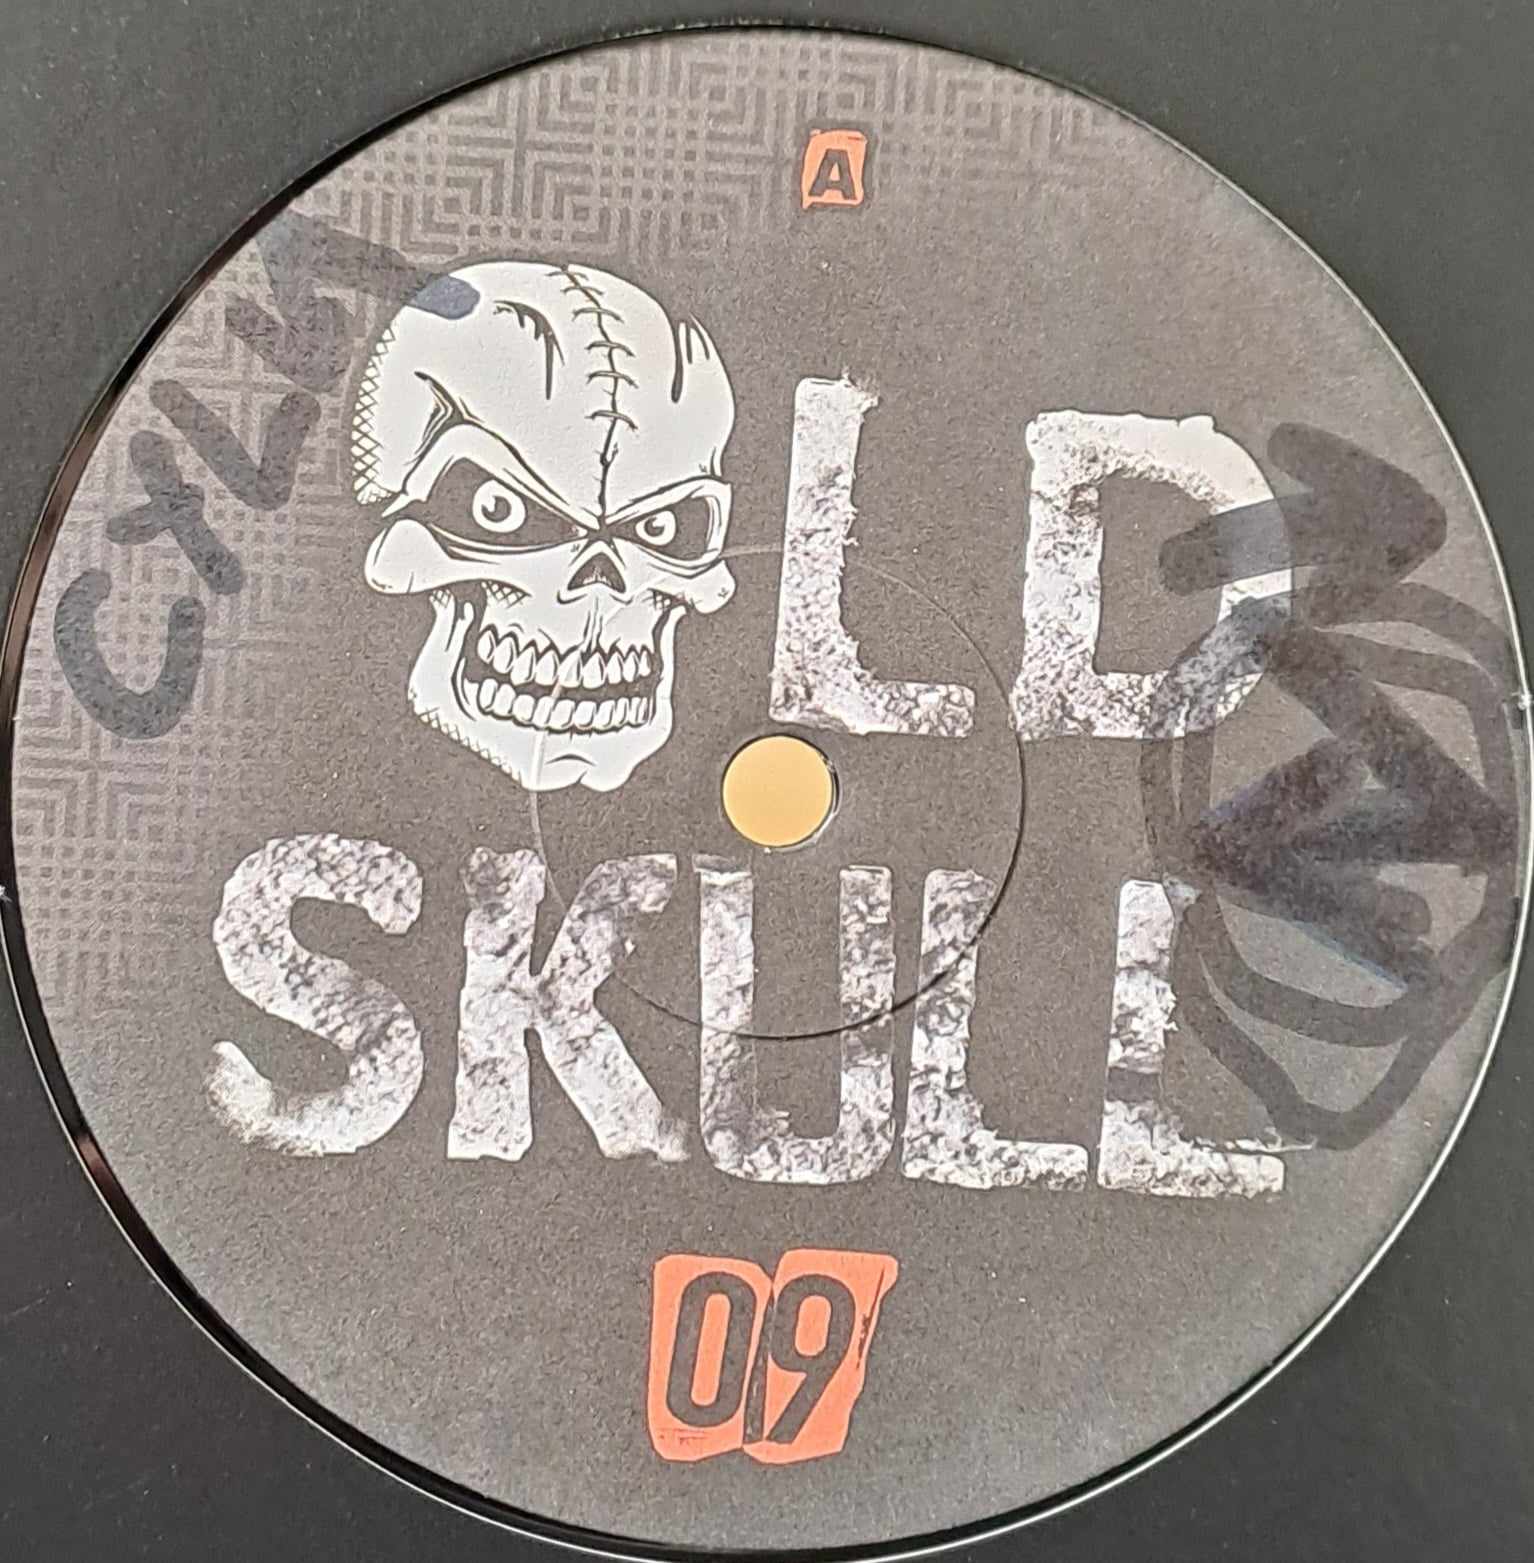 Old Skull 09 - vinyle freetekno